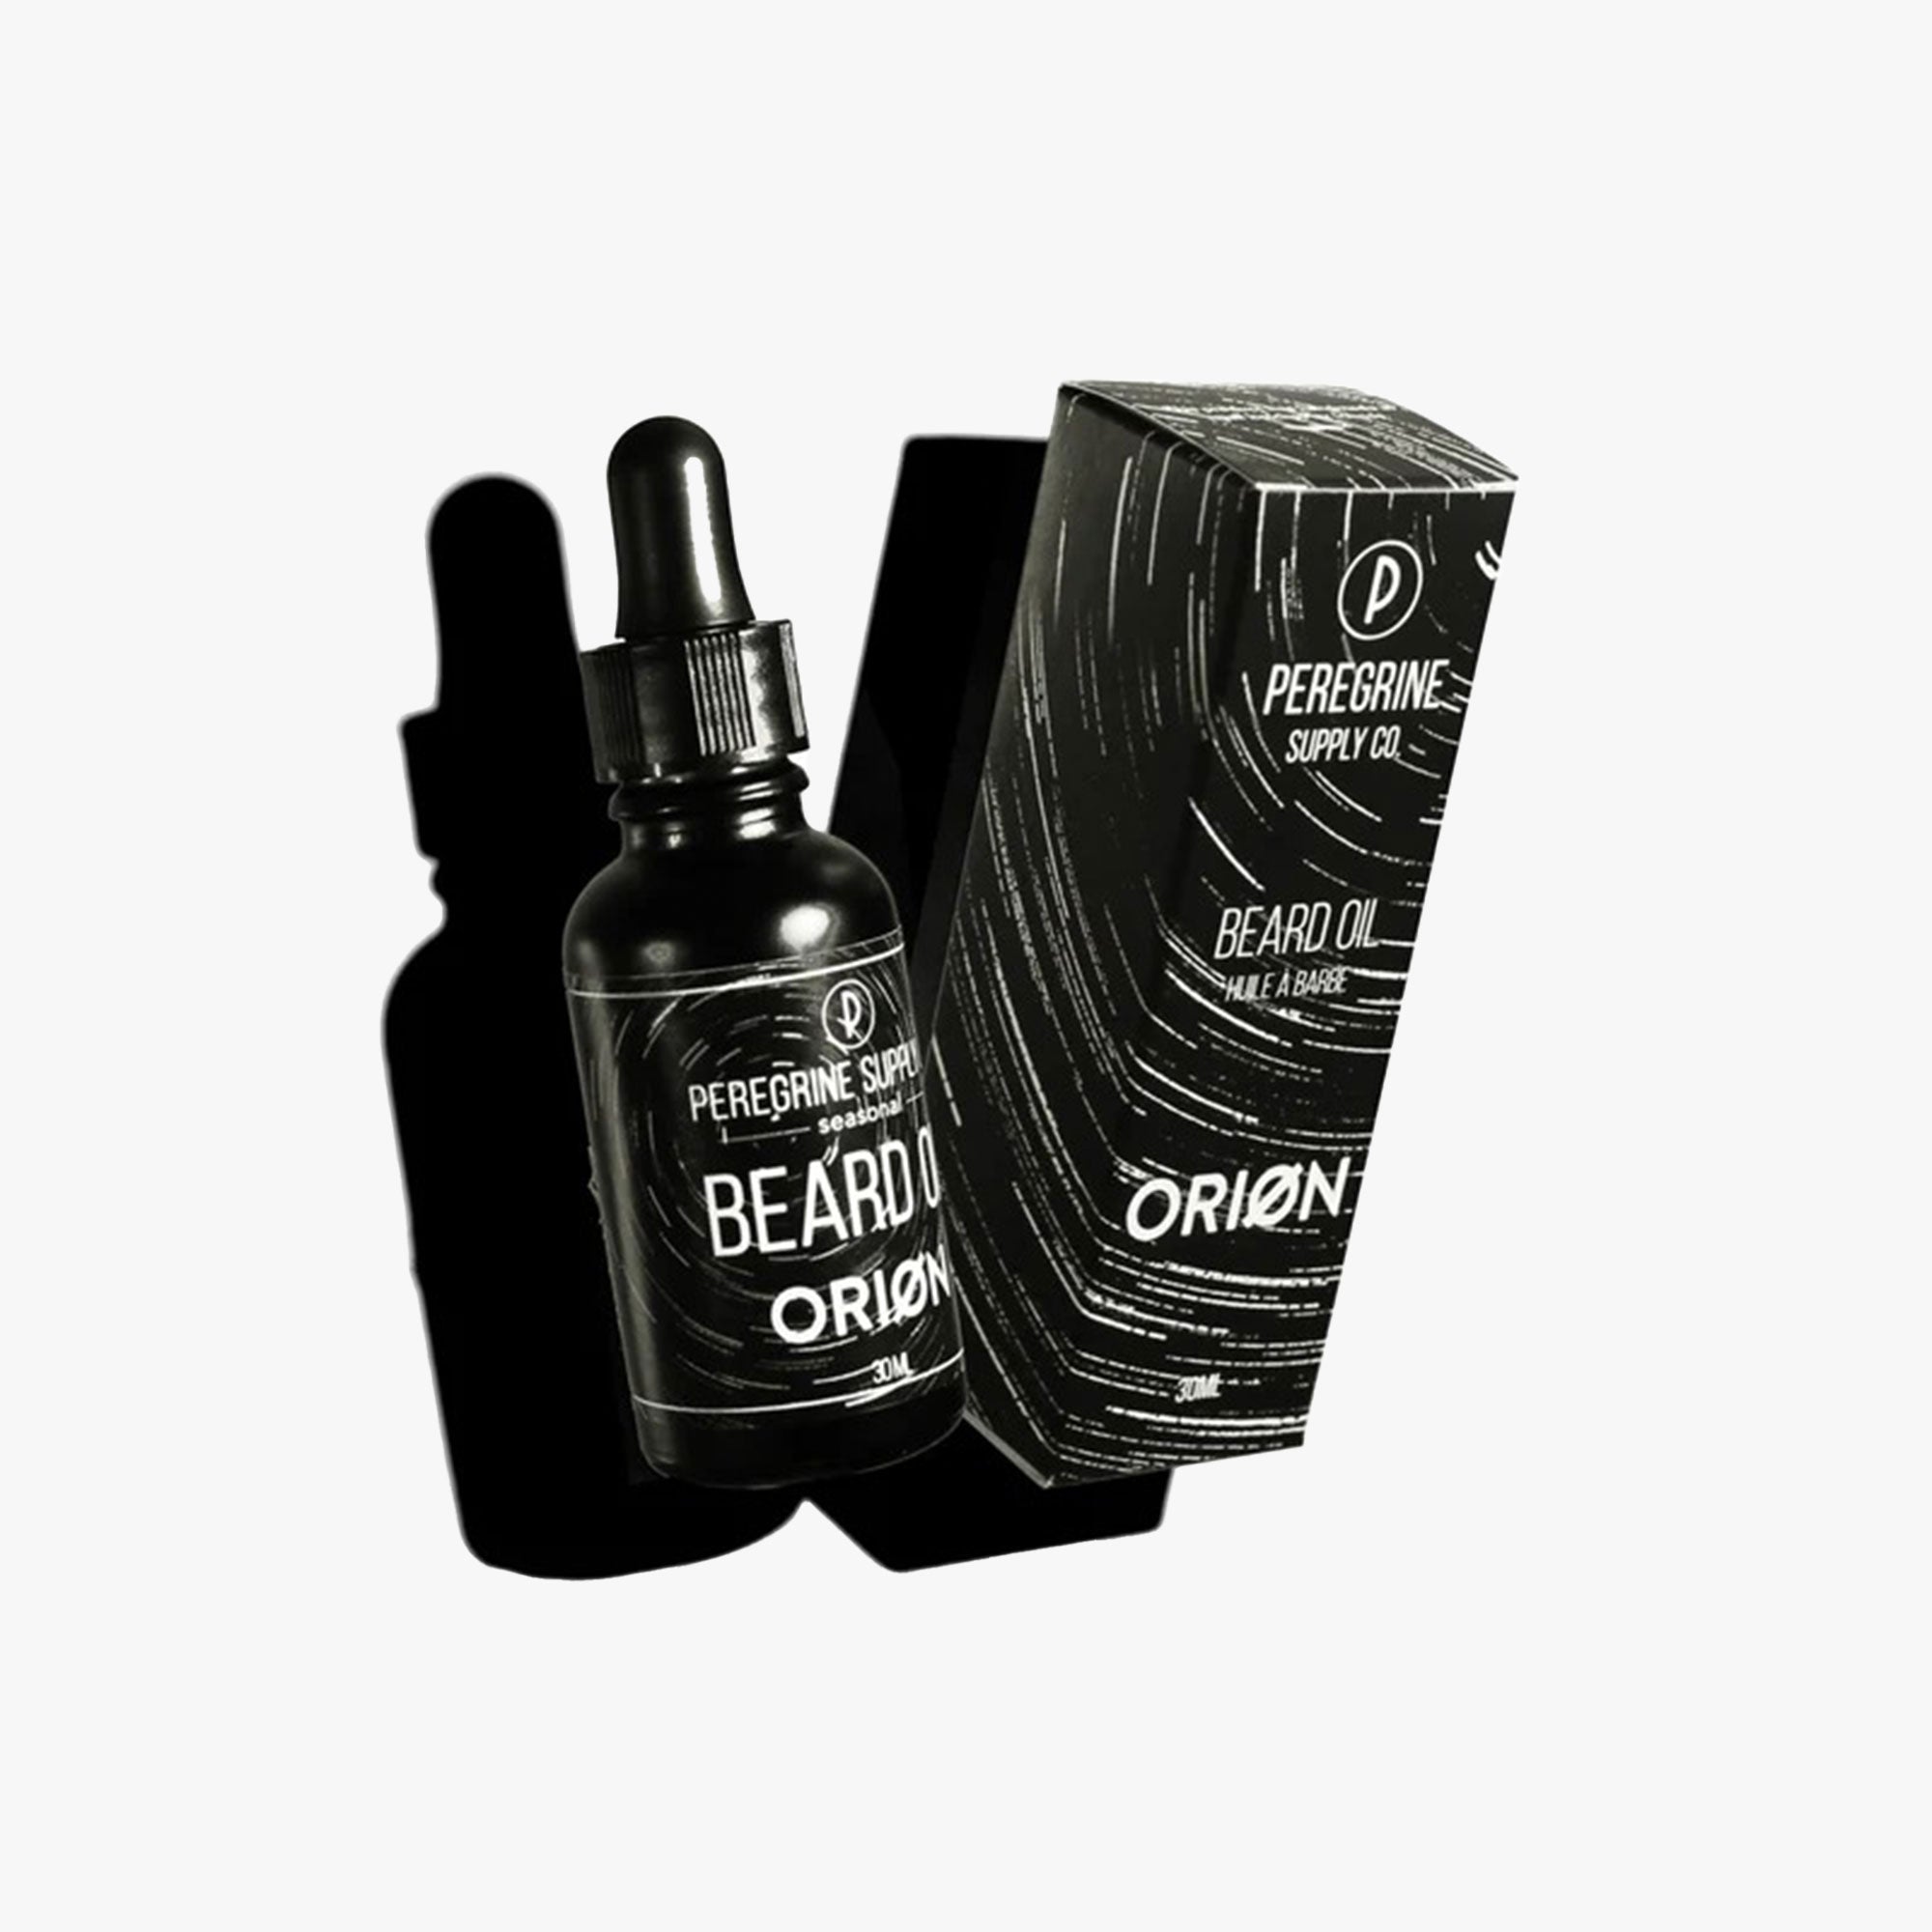 Peregrine Supply Co. Orion Beard Oil